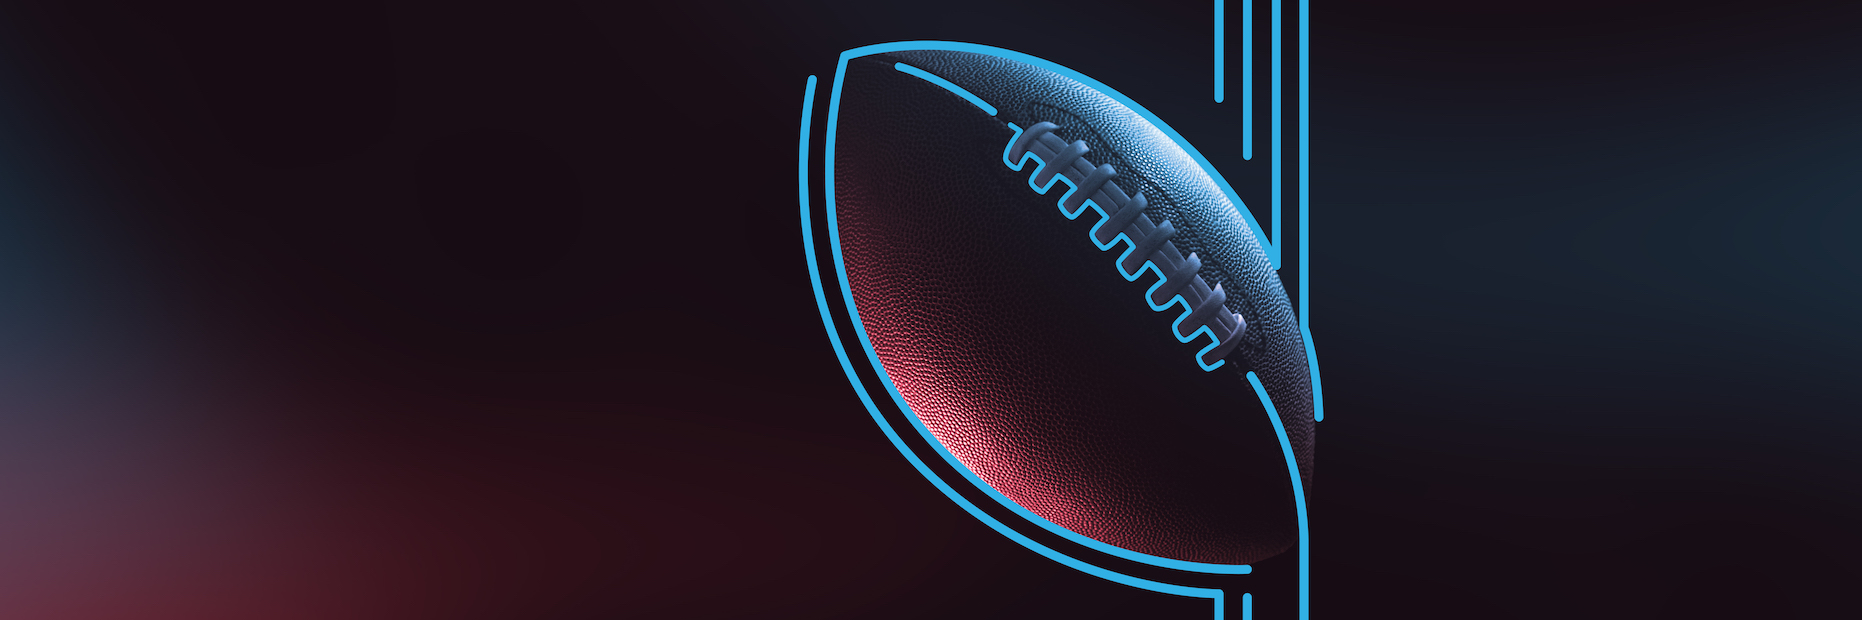 Brand Bowl 2021 Ad Tracker: Rocket Mortgage